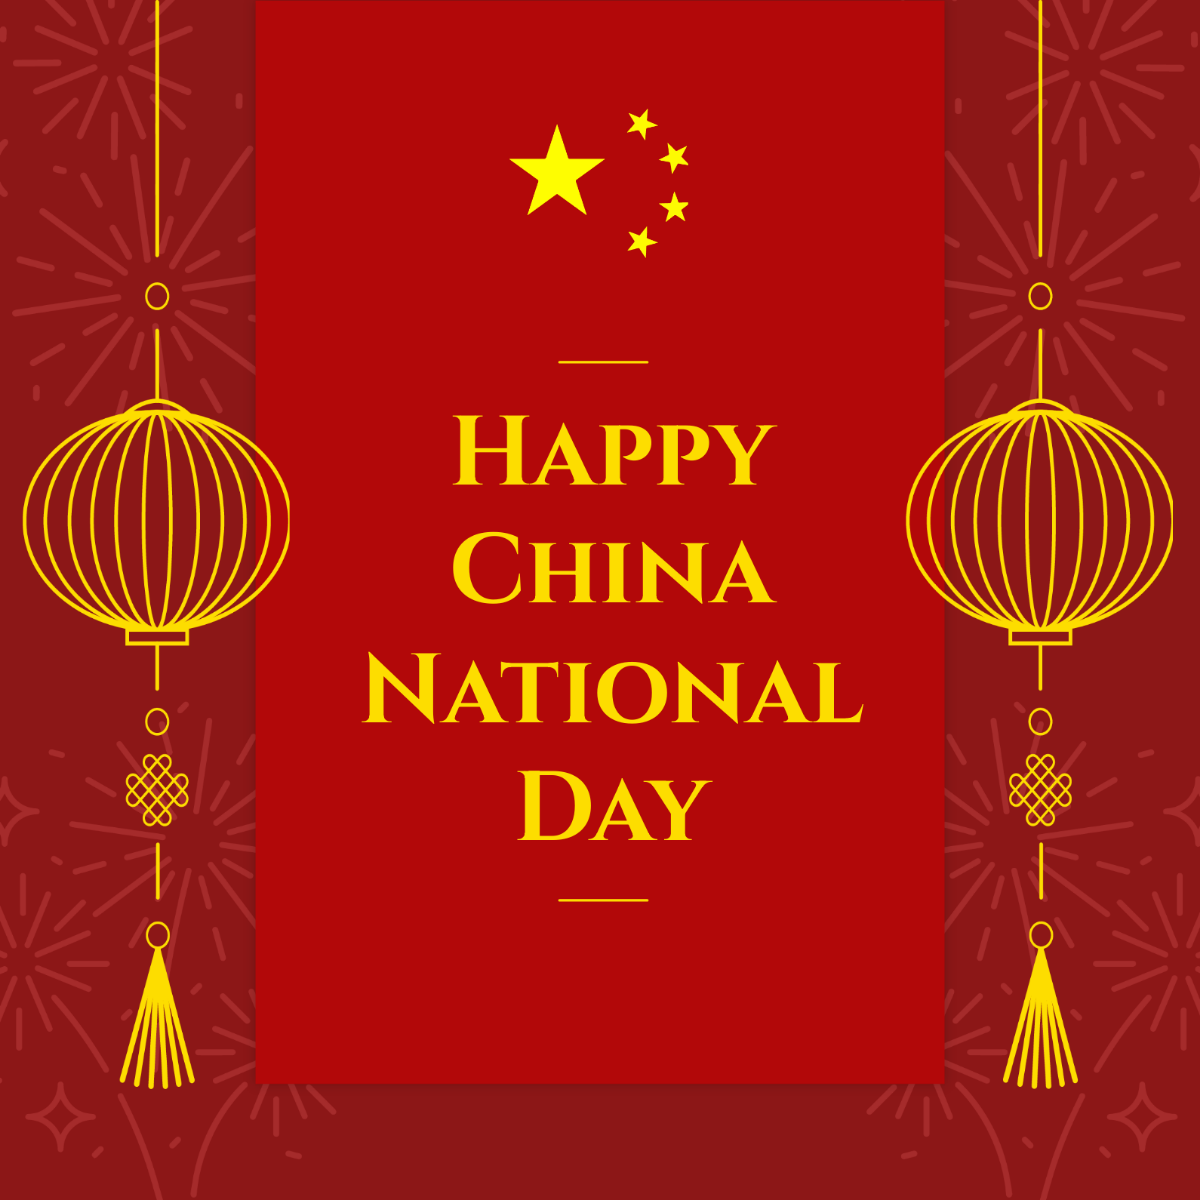 China National Day LinkedIn Post Template